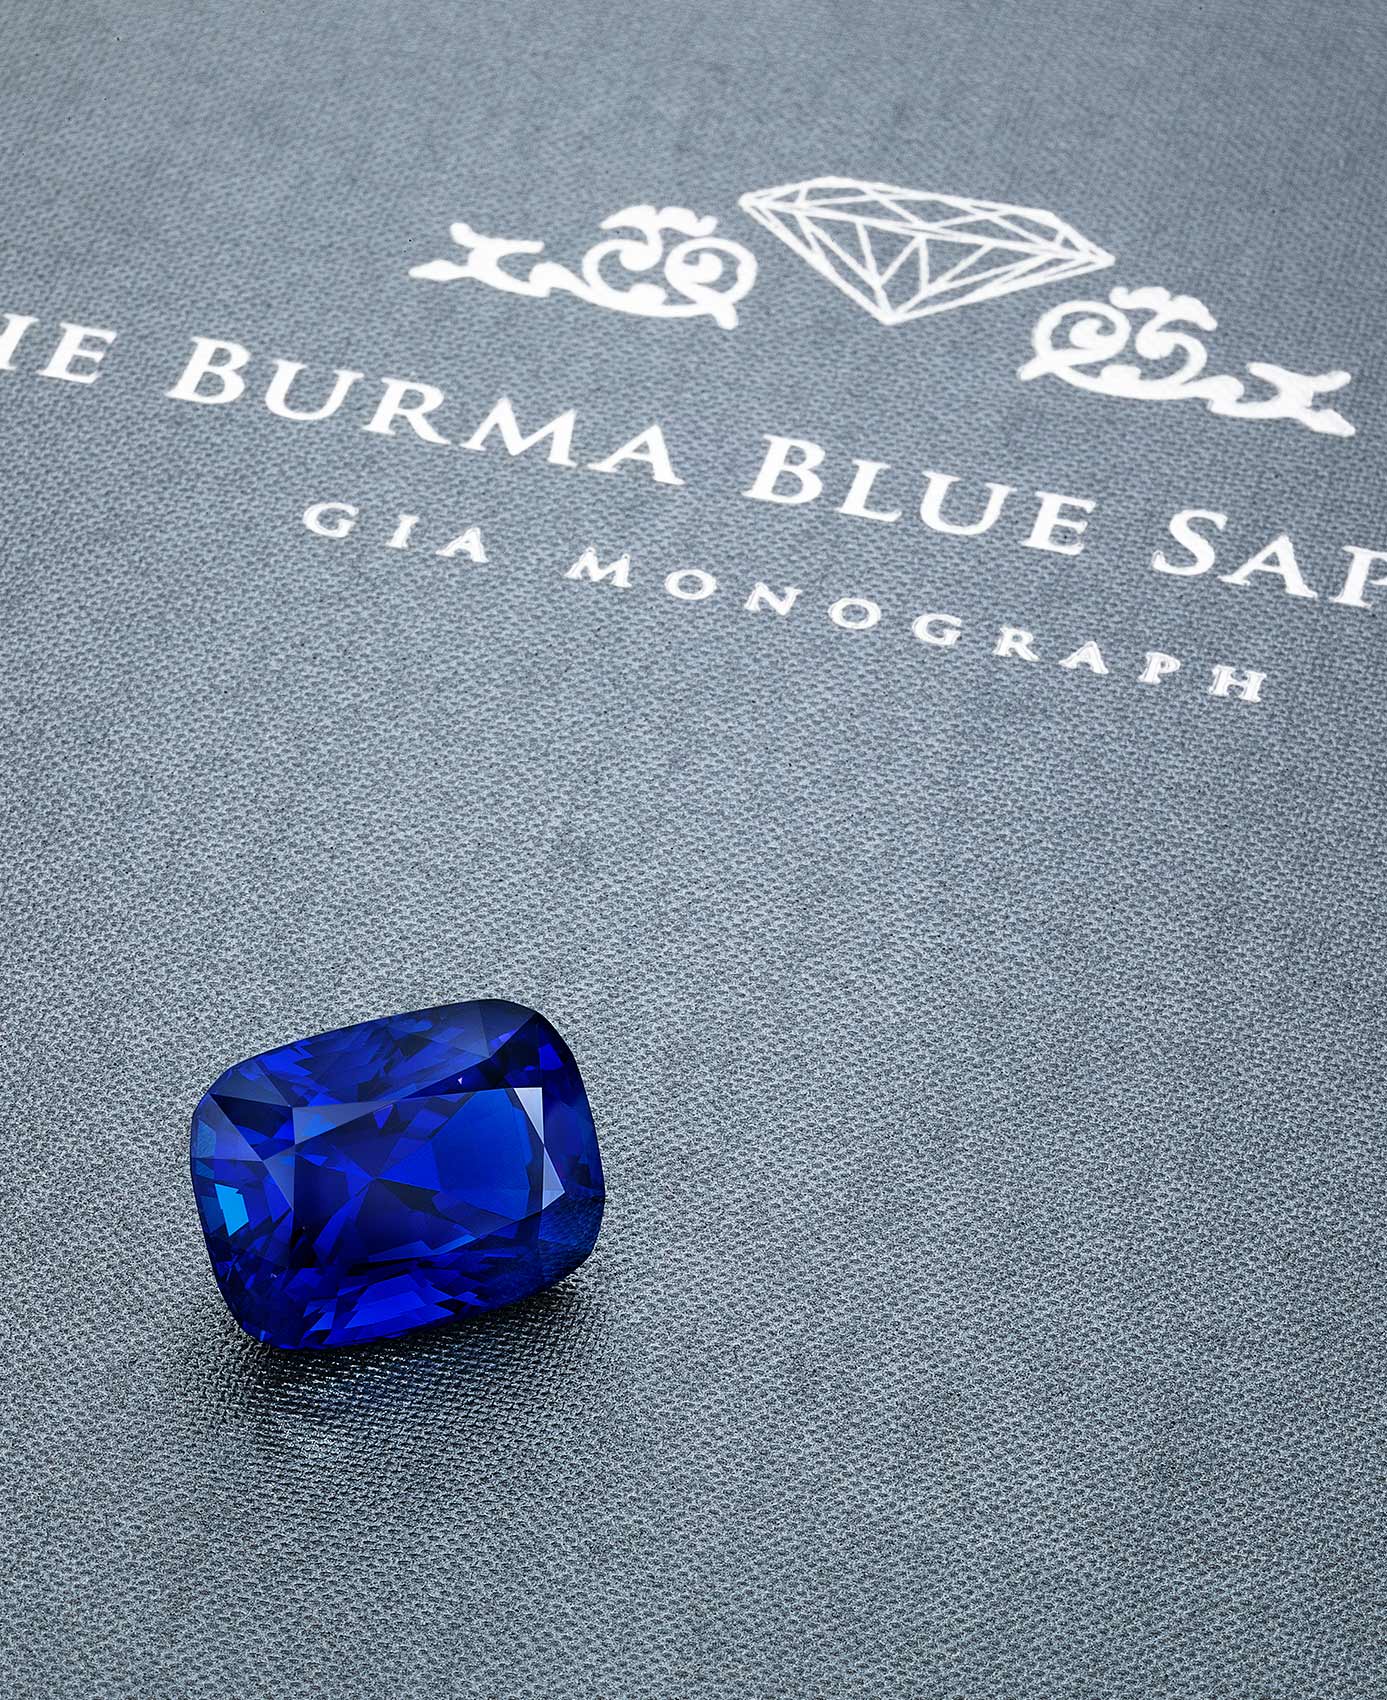 The Burma Blue Sapphire